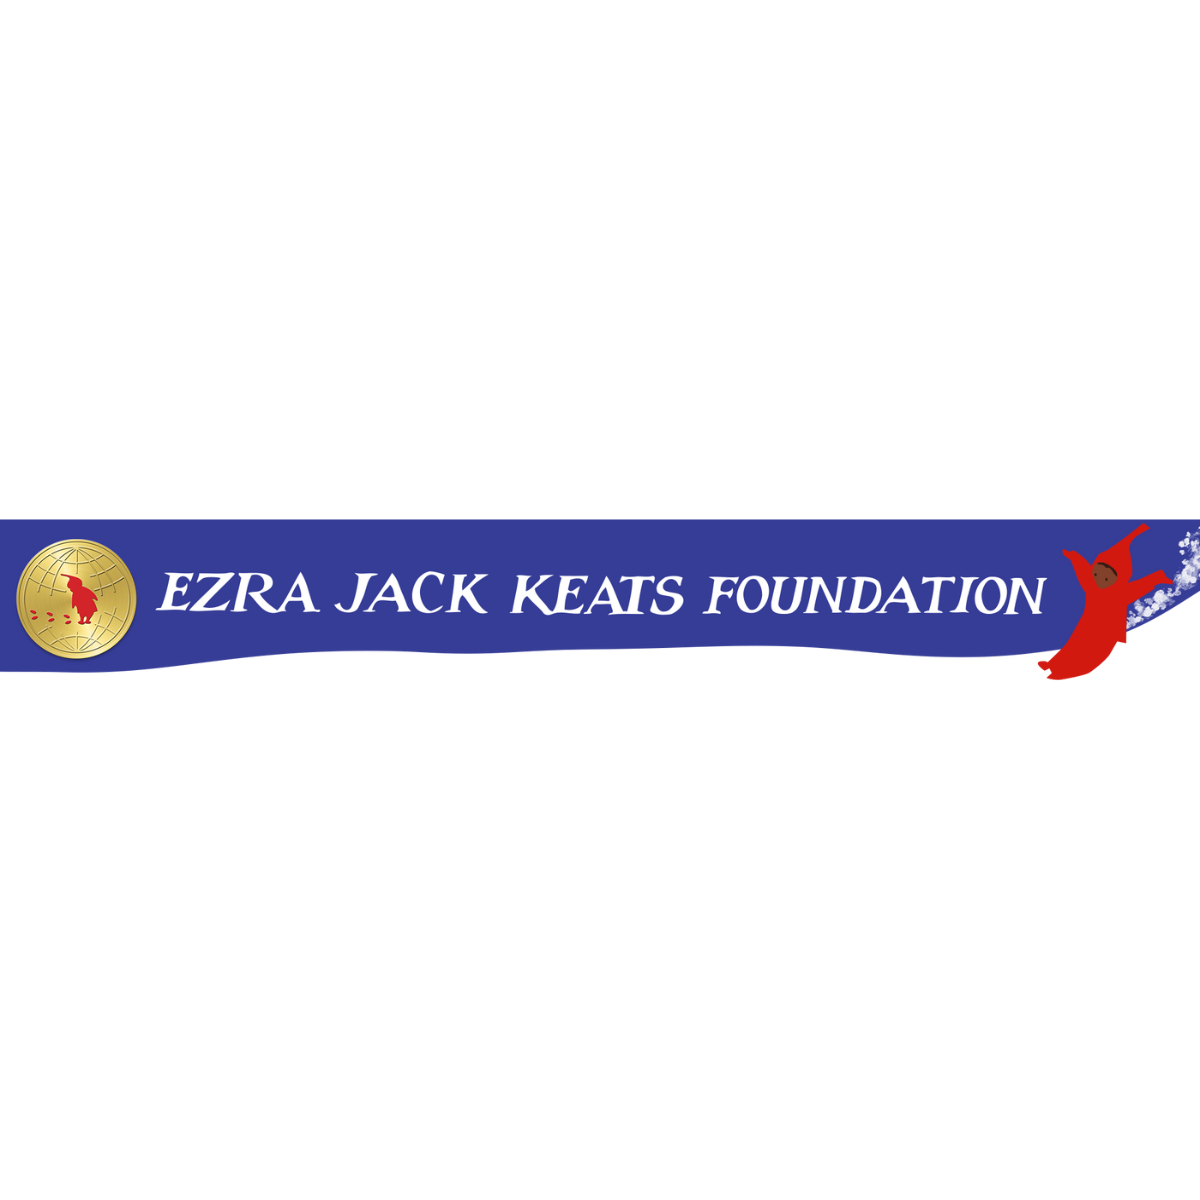 EJK Foundation